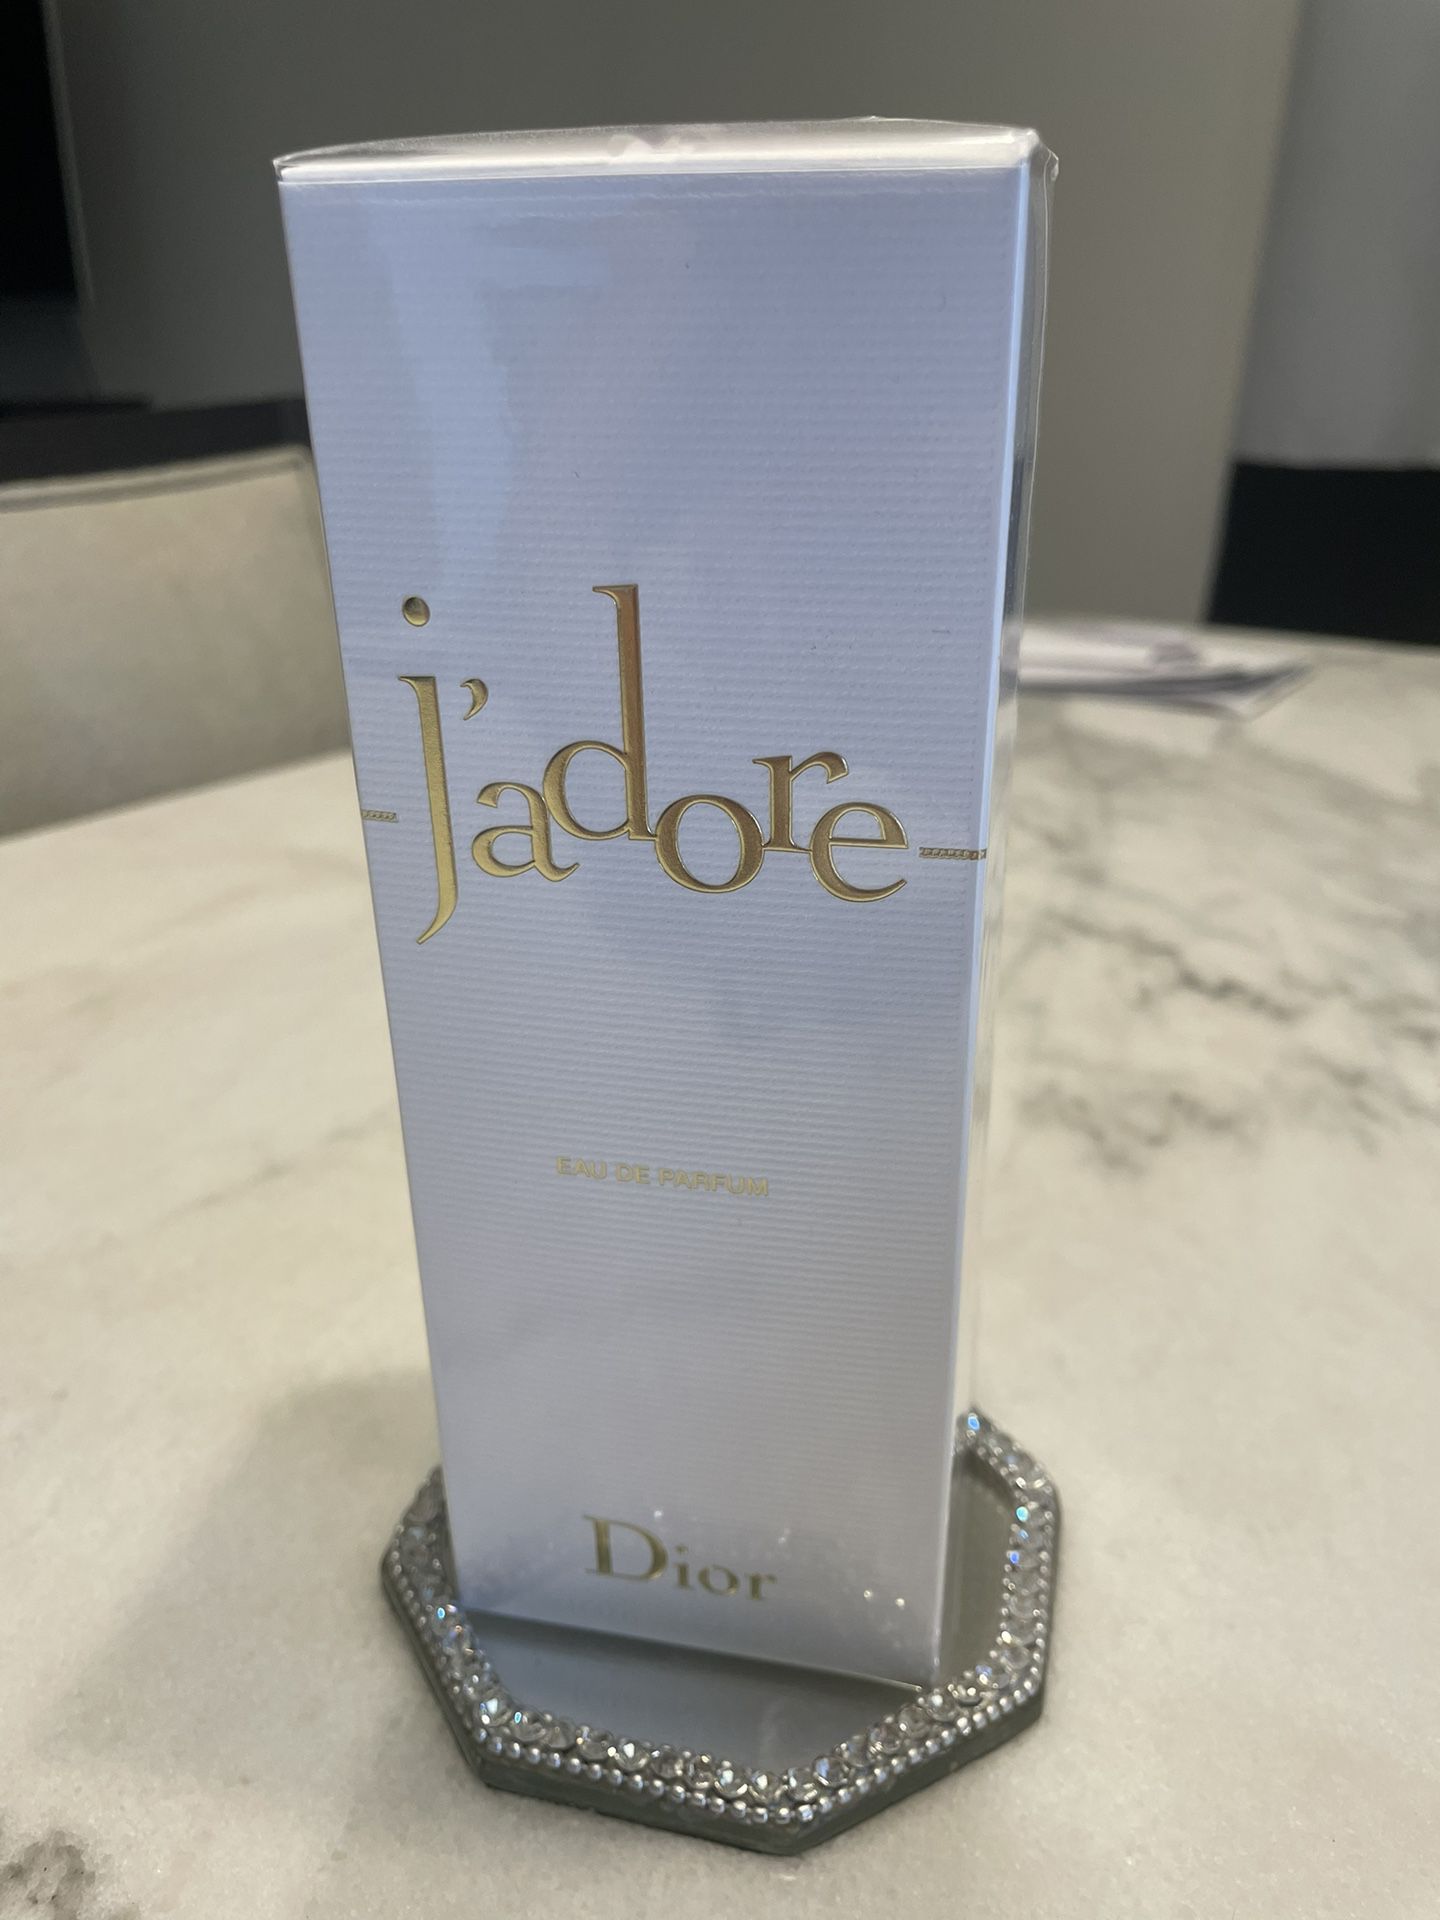 Perfume Jadore Dior